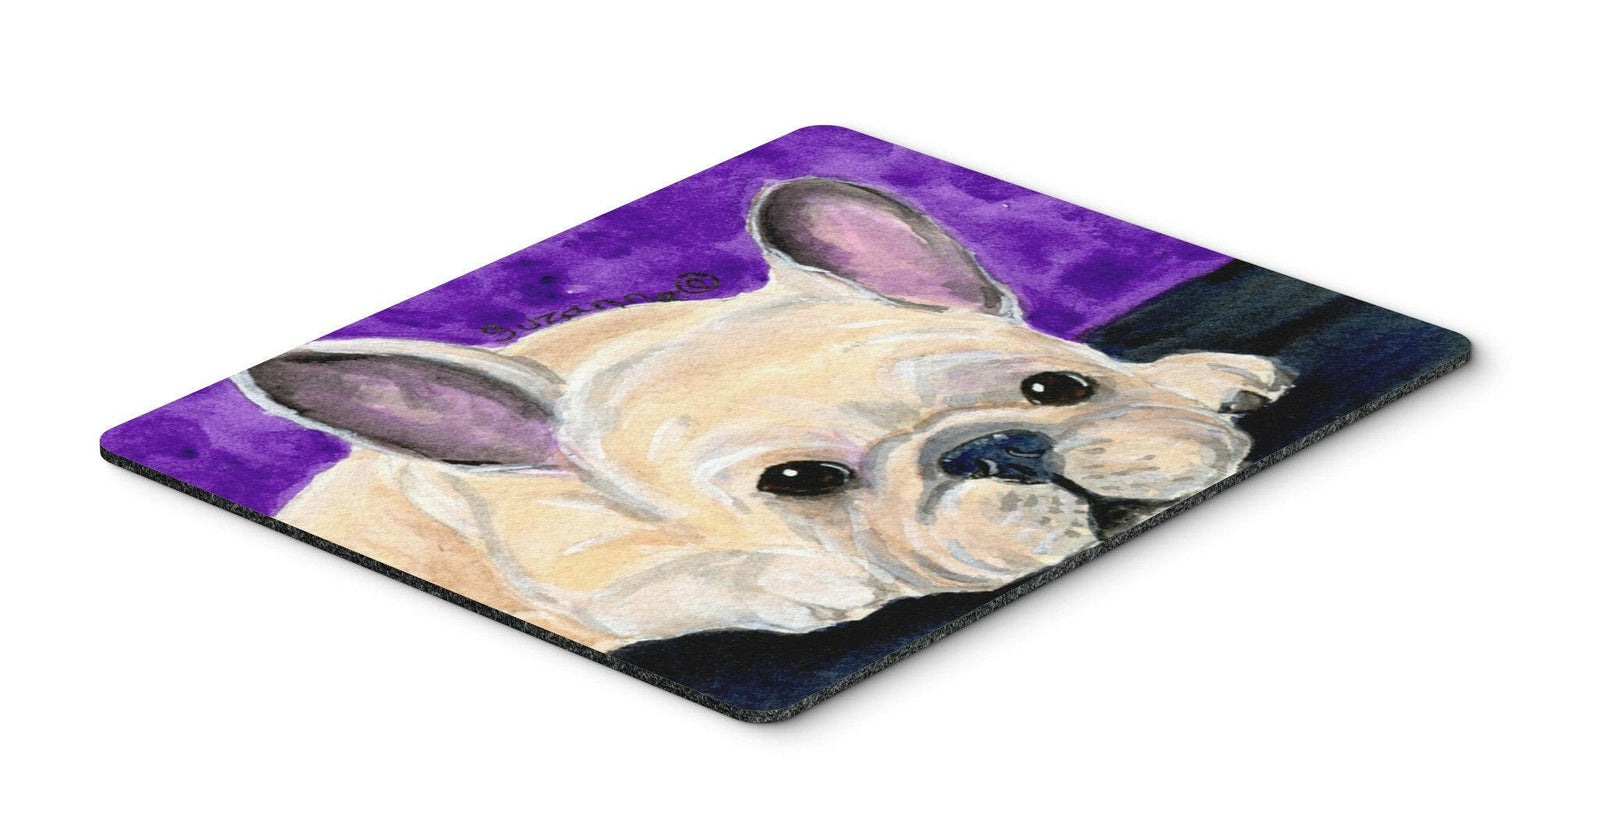 French Bulldog Mouse pad, hot pad, or trivet by Caroline's Treasures